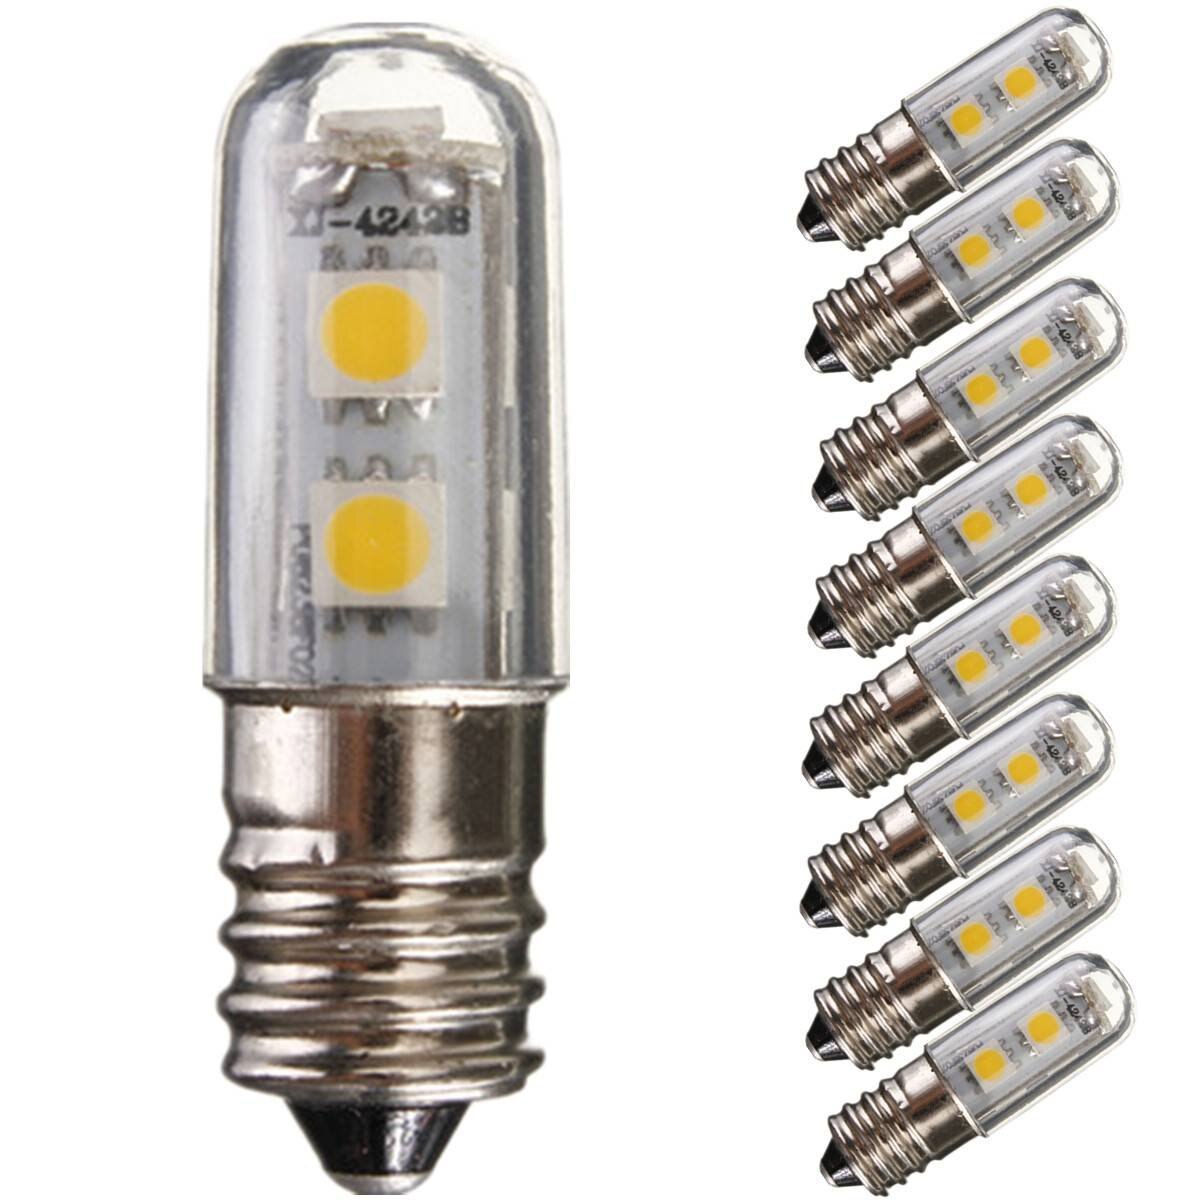 8 Pack E14 1W Led Koelkast Lampen 7 Smd 5050 Warm Wit Kleur 15W Vervanging Voor Halogeen Lamp 3000K 45LM Energiebesparing 22